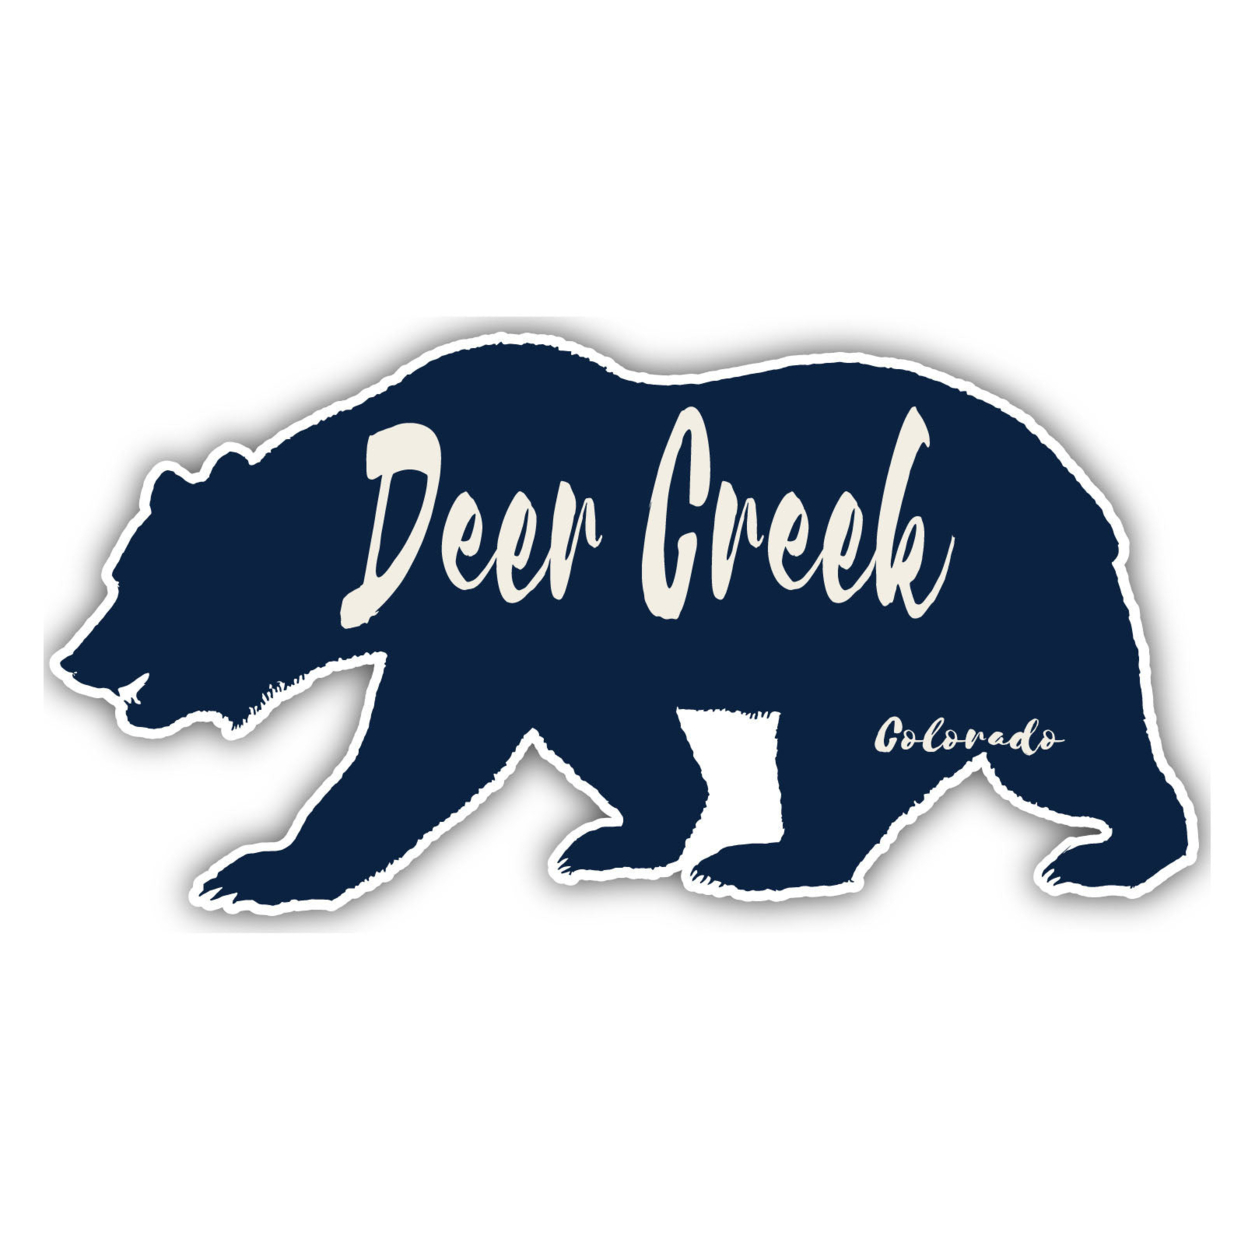 Deer Creek Colorado Souvenir Decorative Stickers (Choose Theme And Size) - Single Unit, 2-Inch, Bear